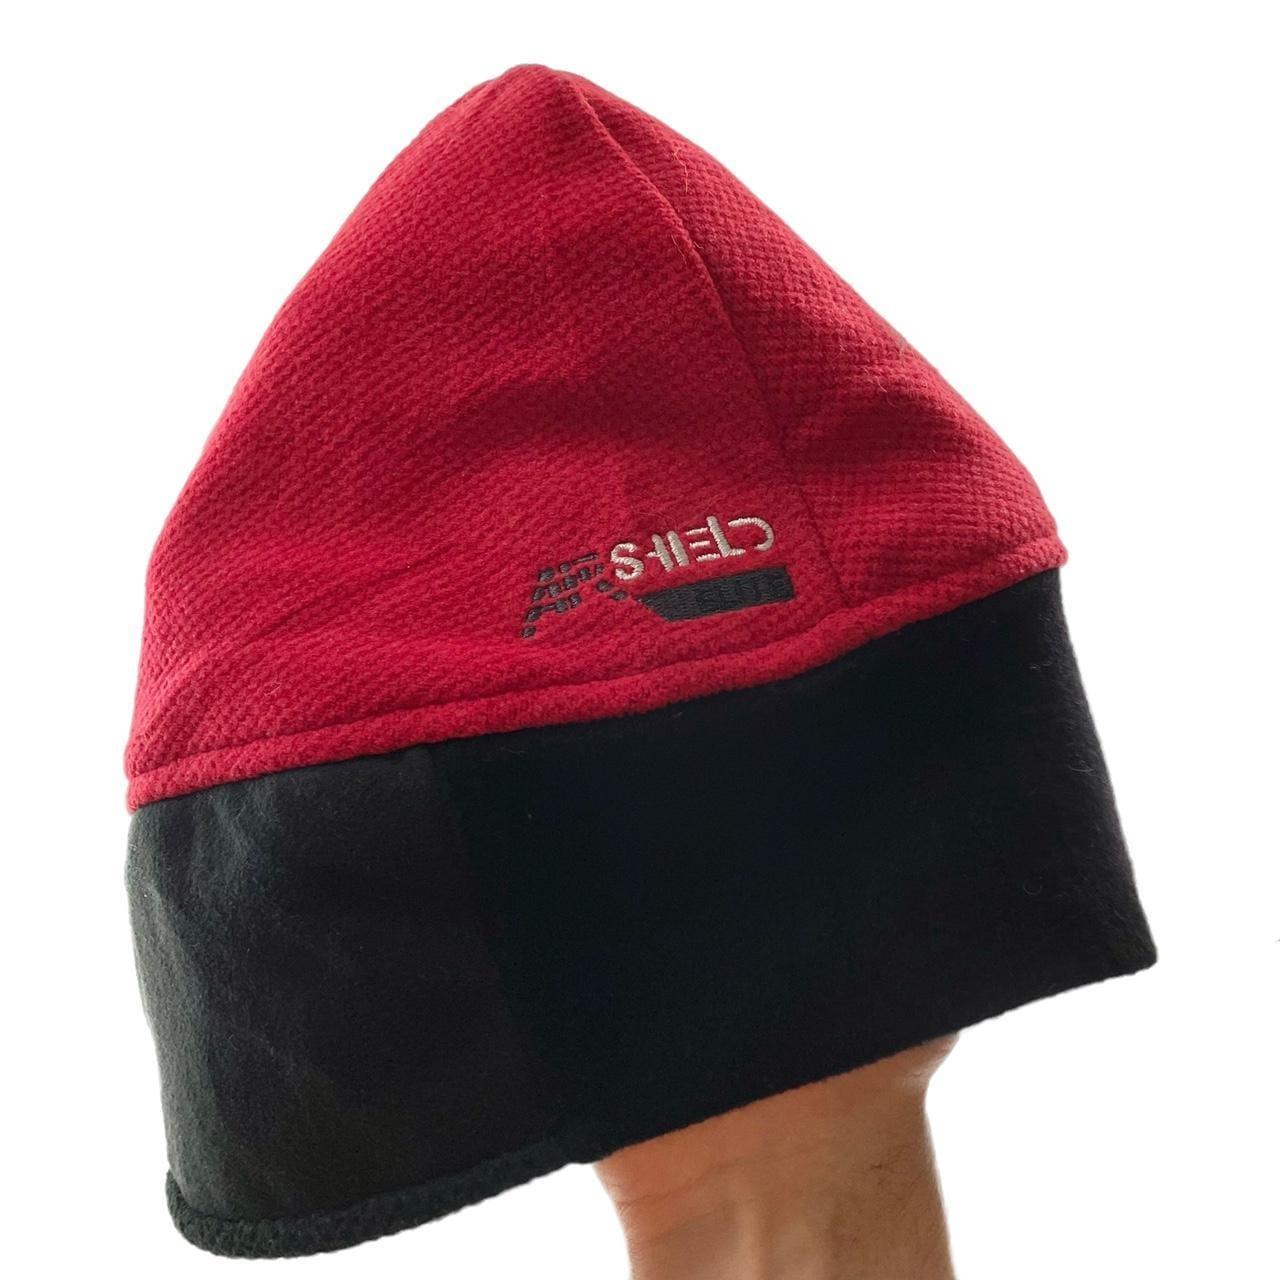 Vintage Mountain hardware fleece hat cap - Known Source